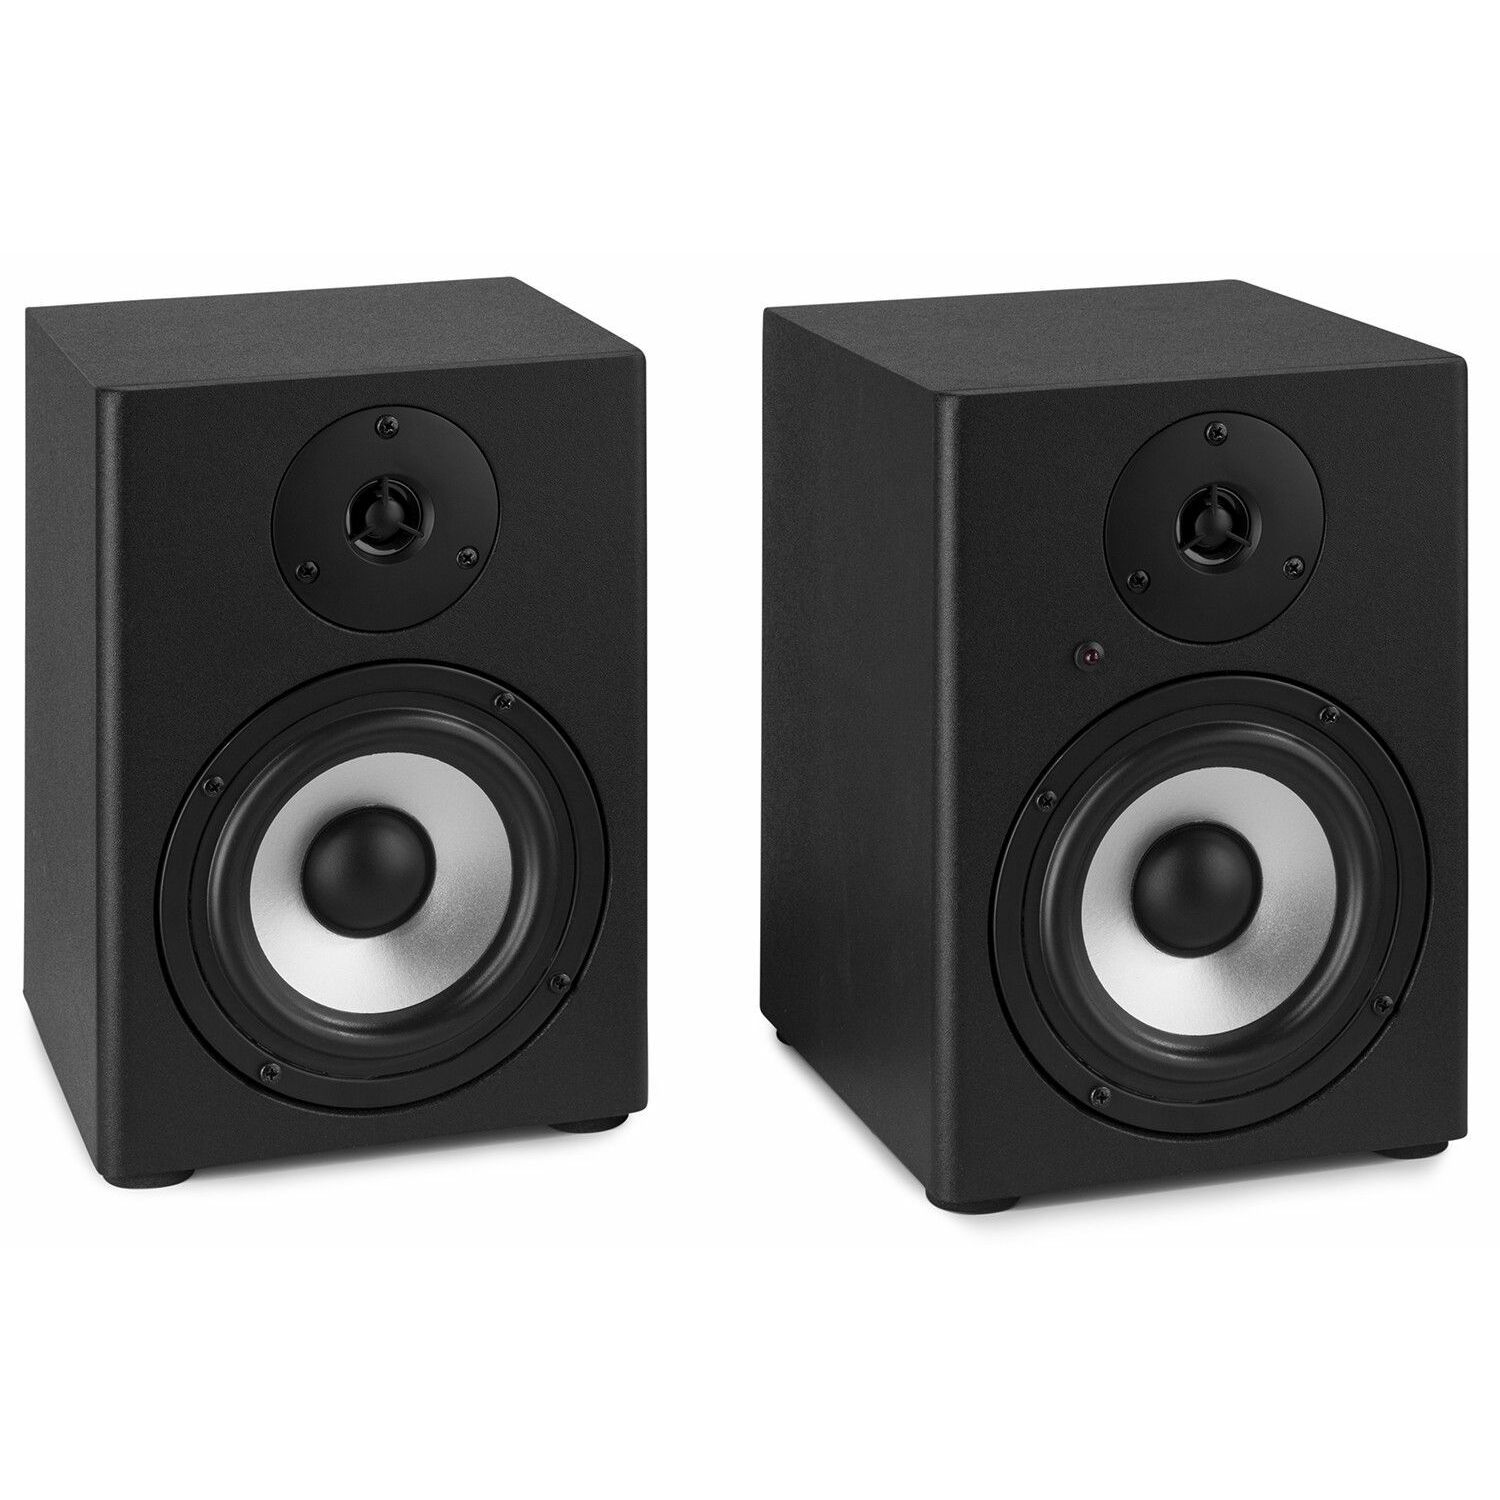 Retourdeal - Vonyx SM50 actieve studio monitor speakerset 5.25" - 140W